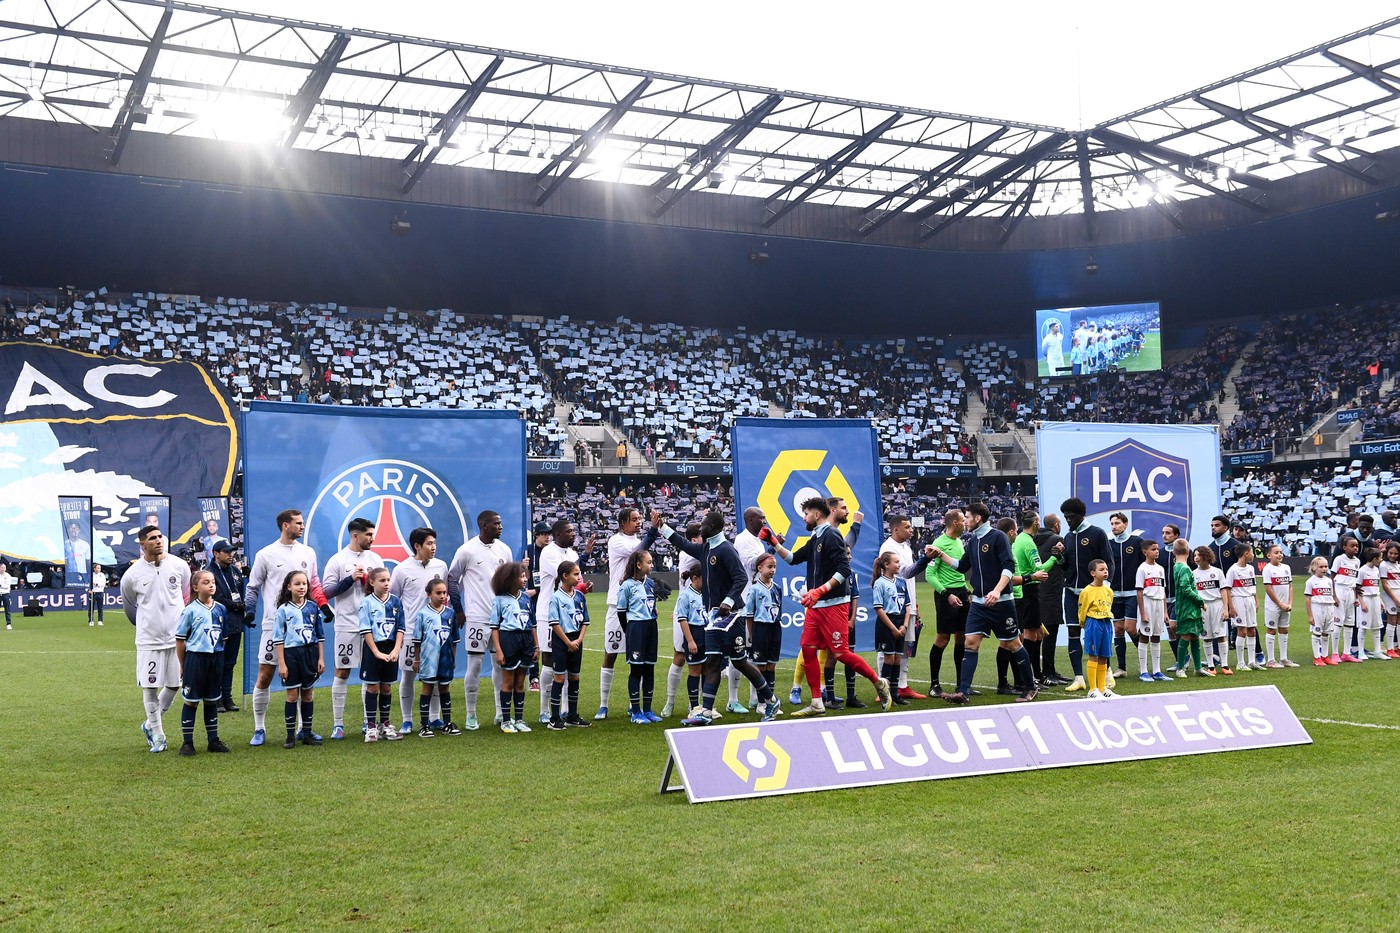 PSG - Le Havre Live Video, 22:00 DGS 4. Echipa lui Luis Enrique poate câștiga titlul